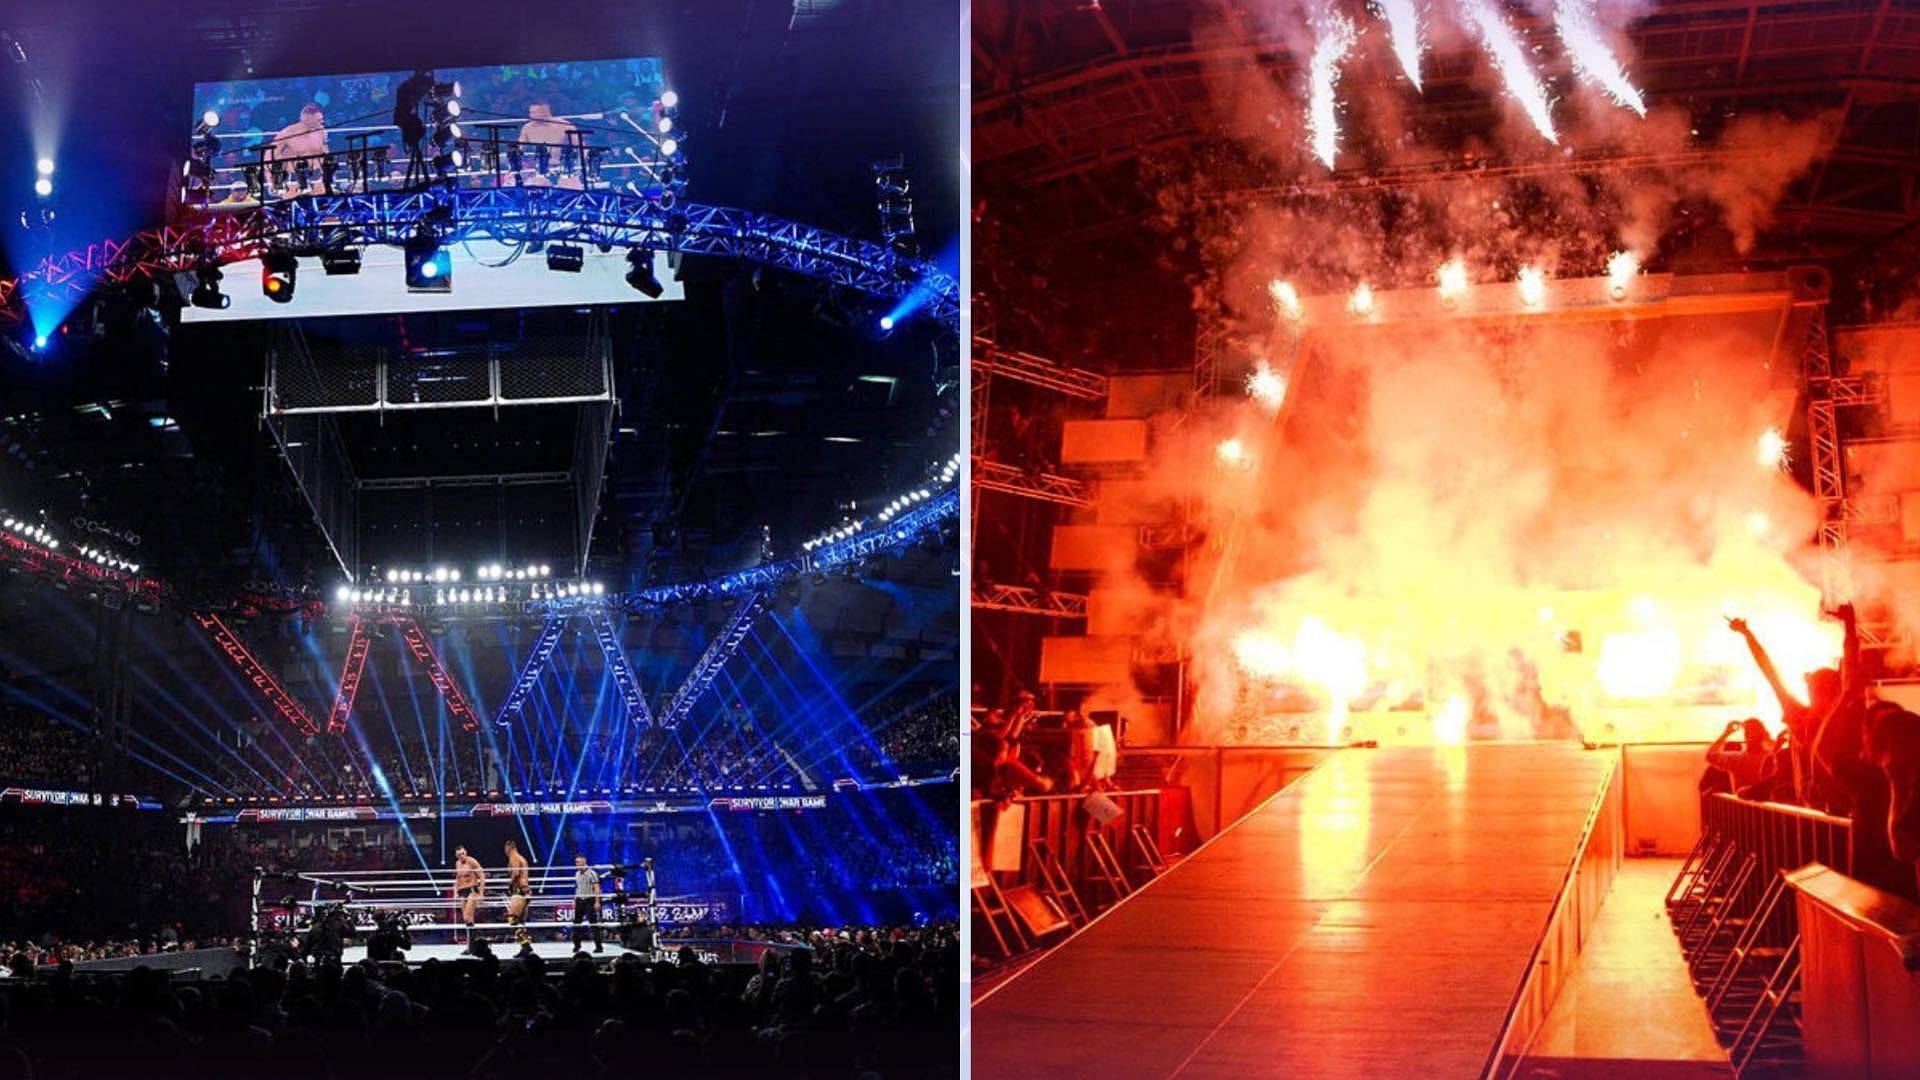 WWE arena